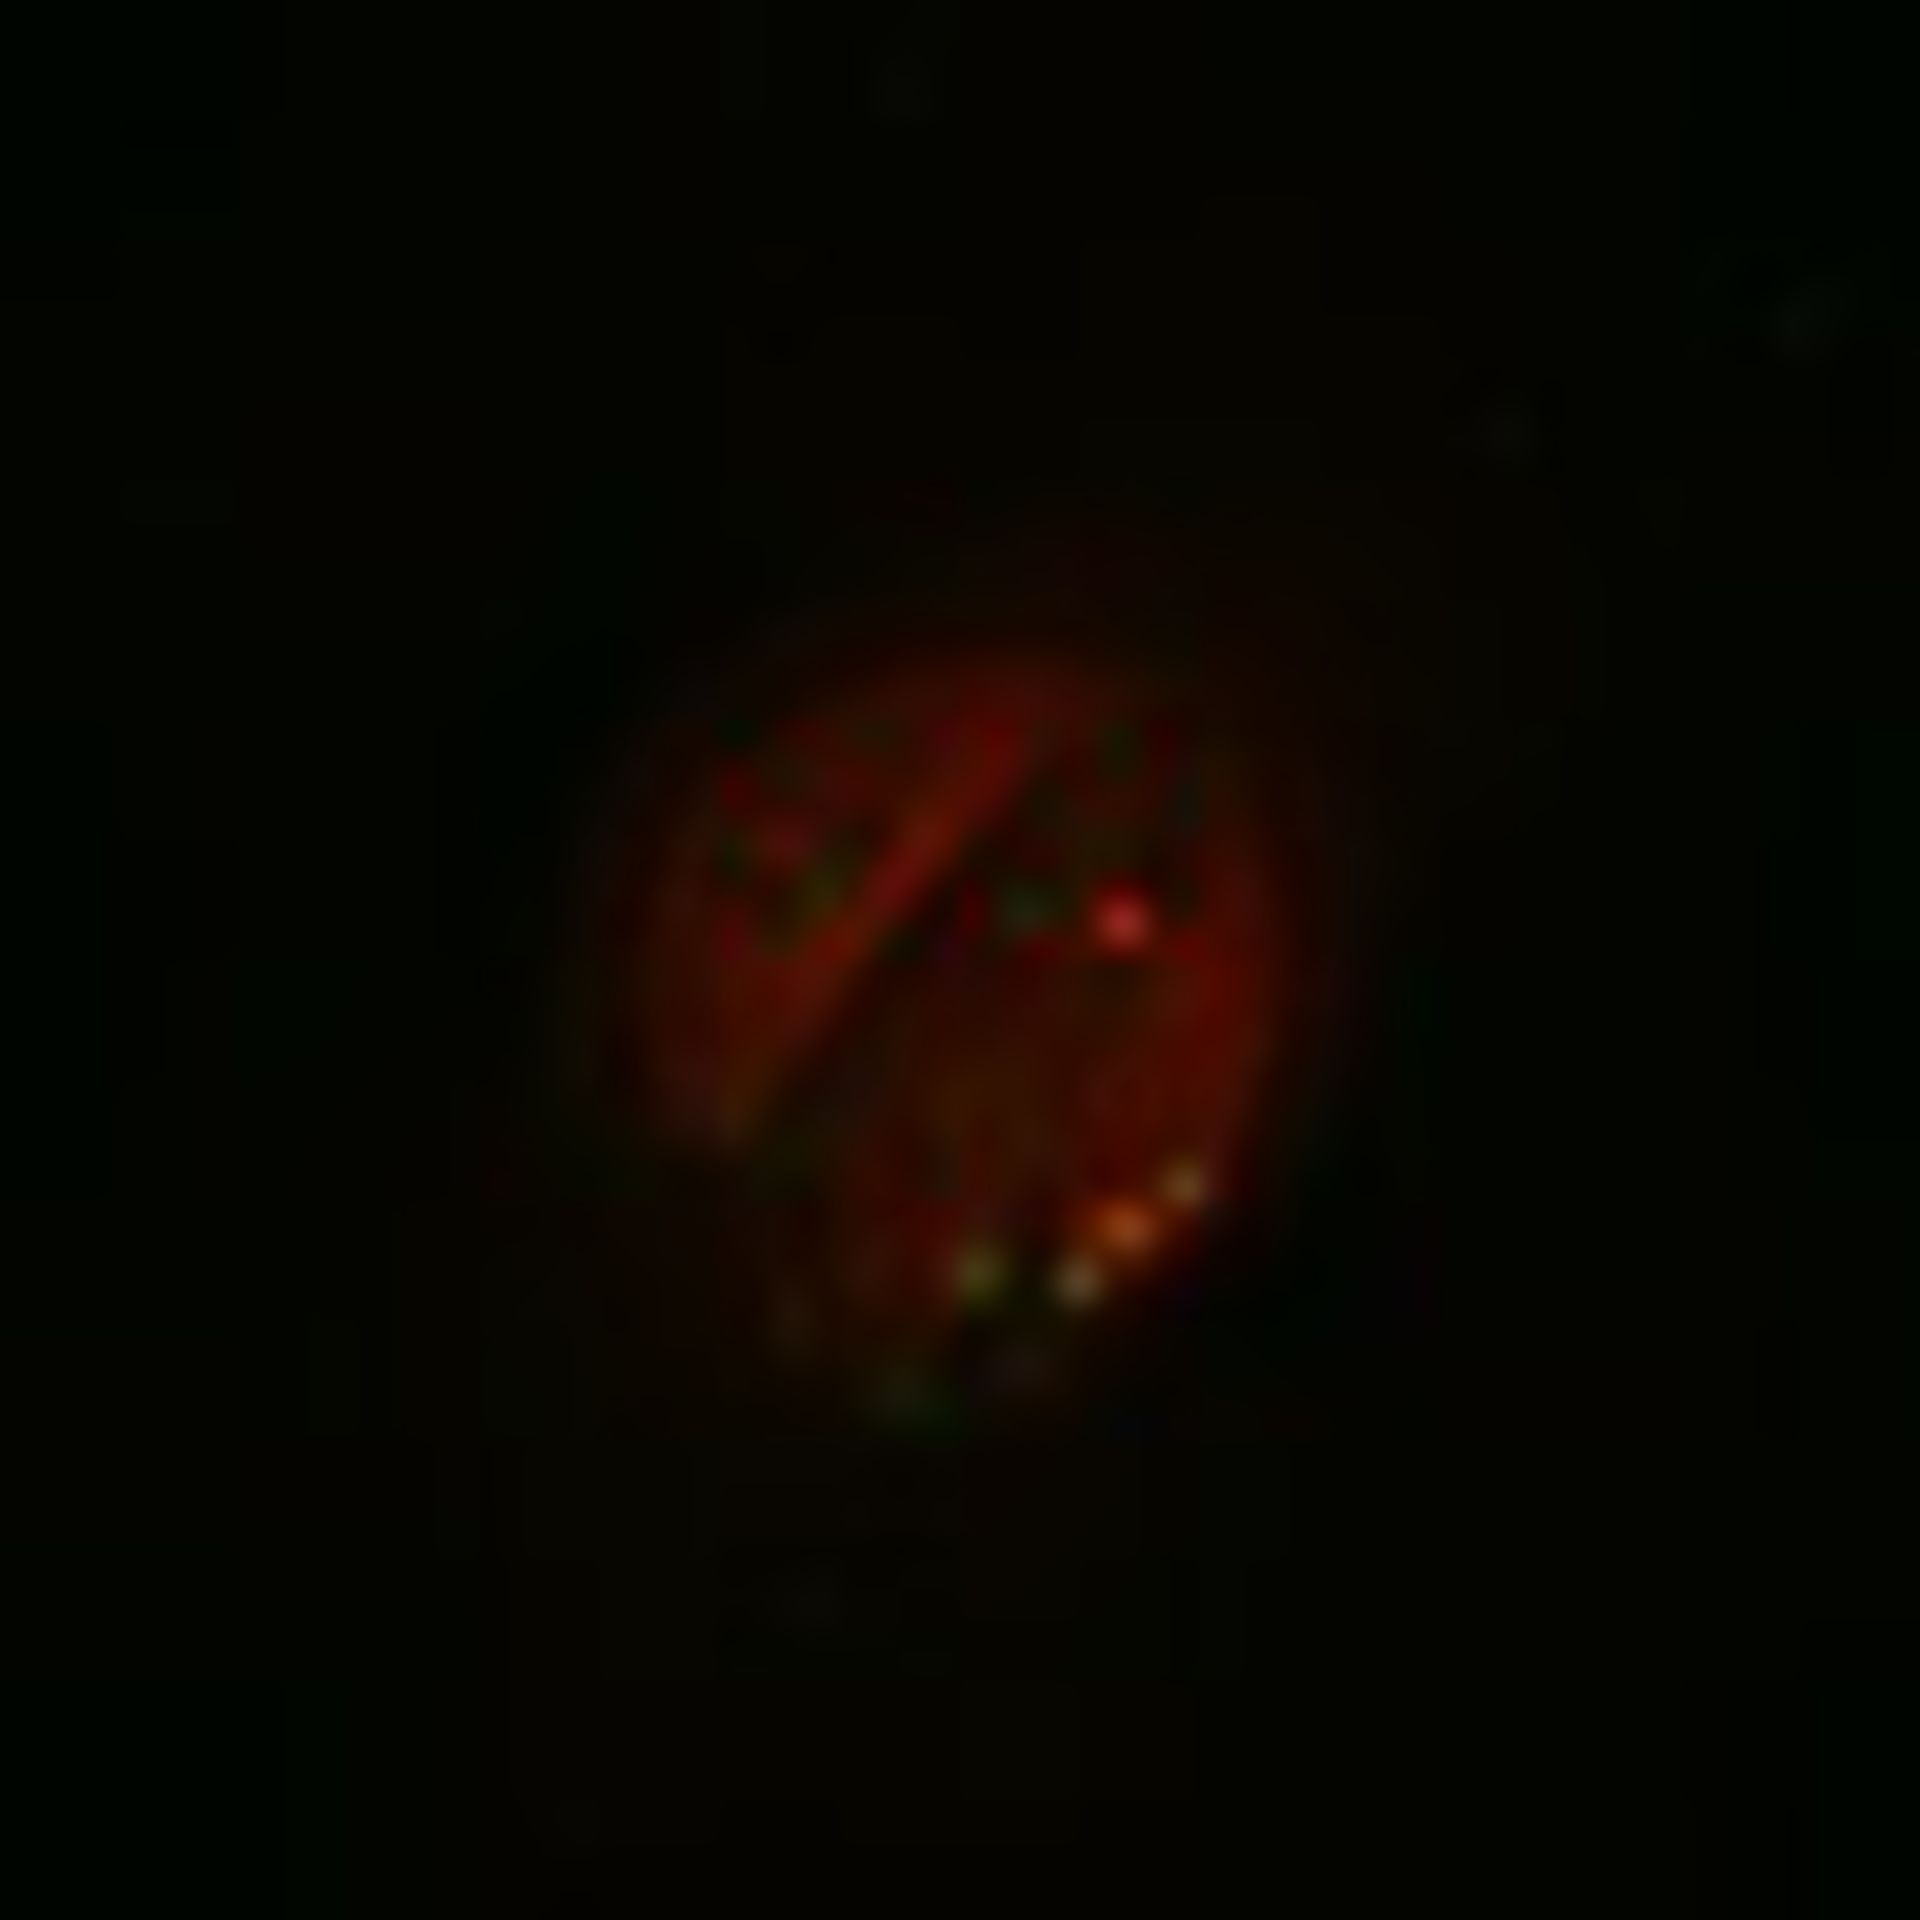 Toxoplasma gondii RH (Polar ring of apical complex) - CIL:10506